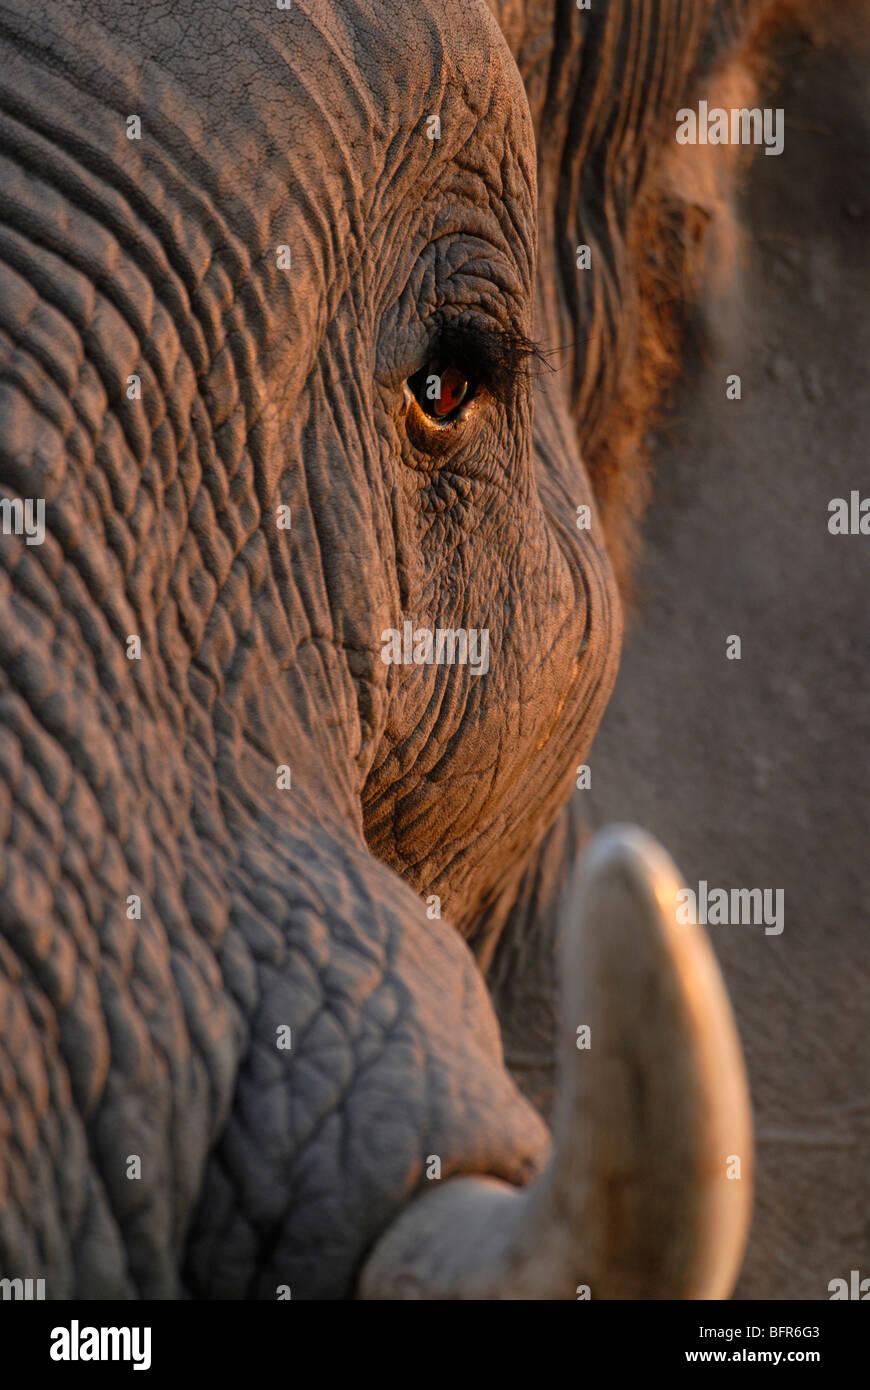 Close-up portrait of elephant bull showing tusk Stock Photo